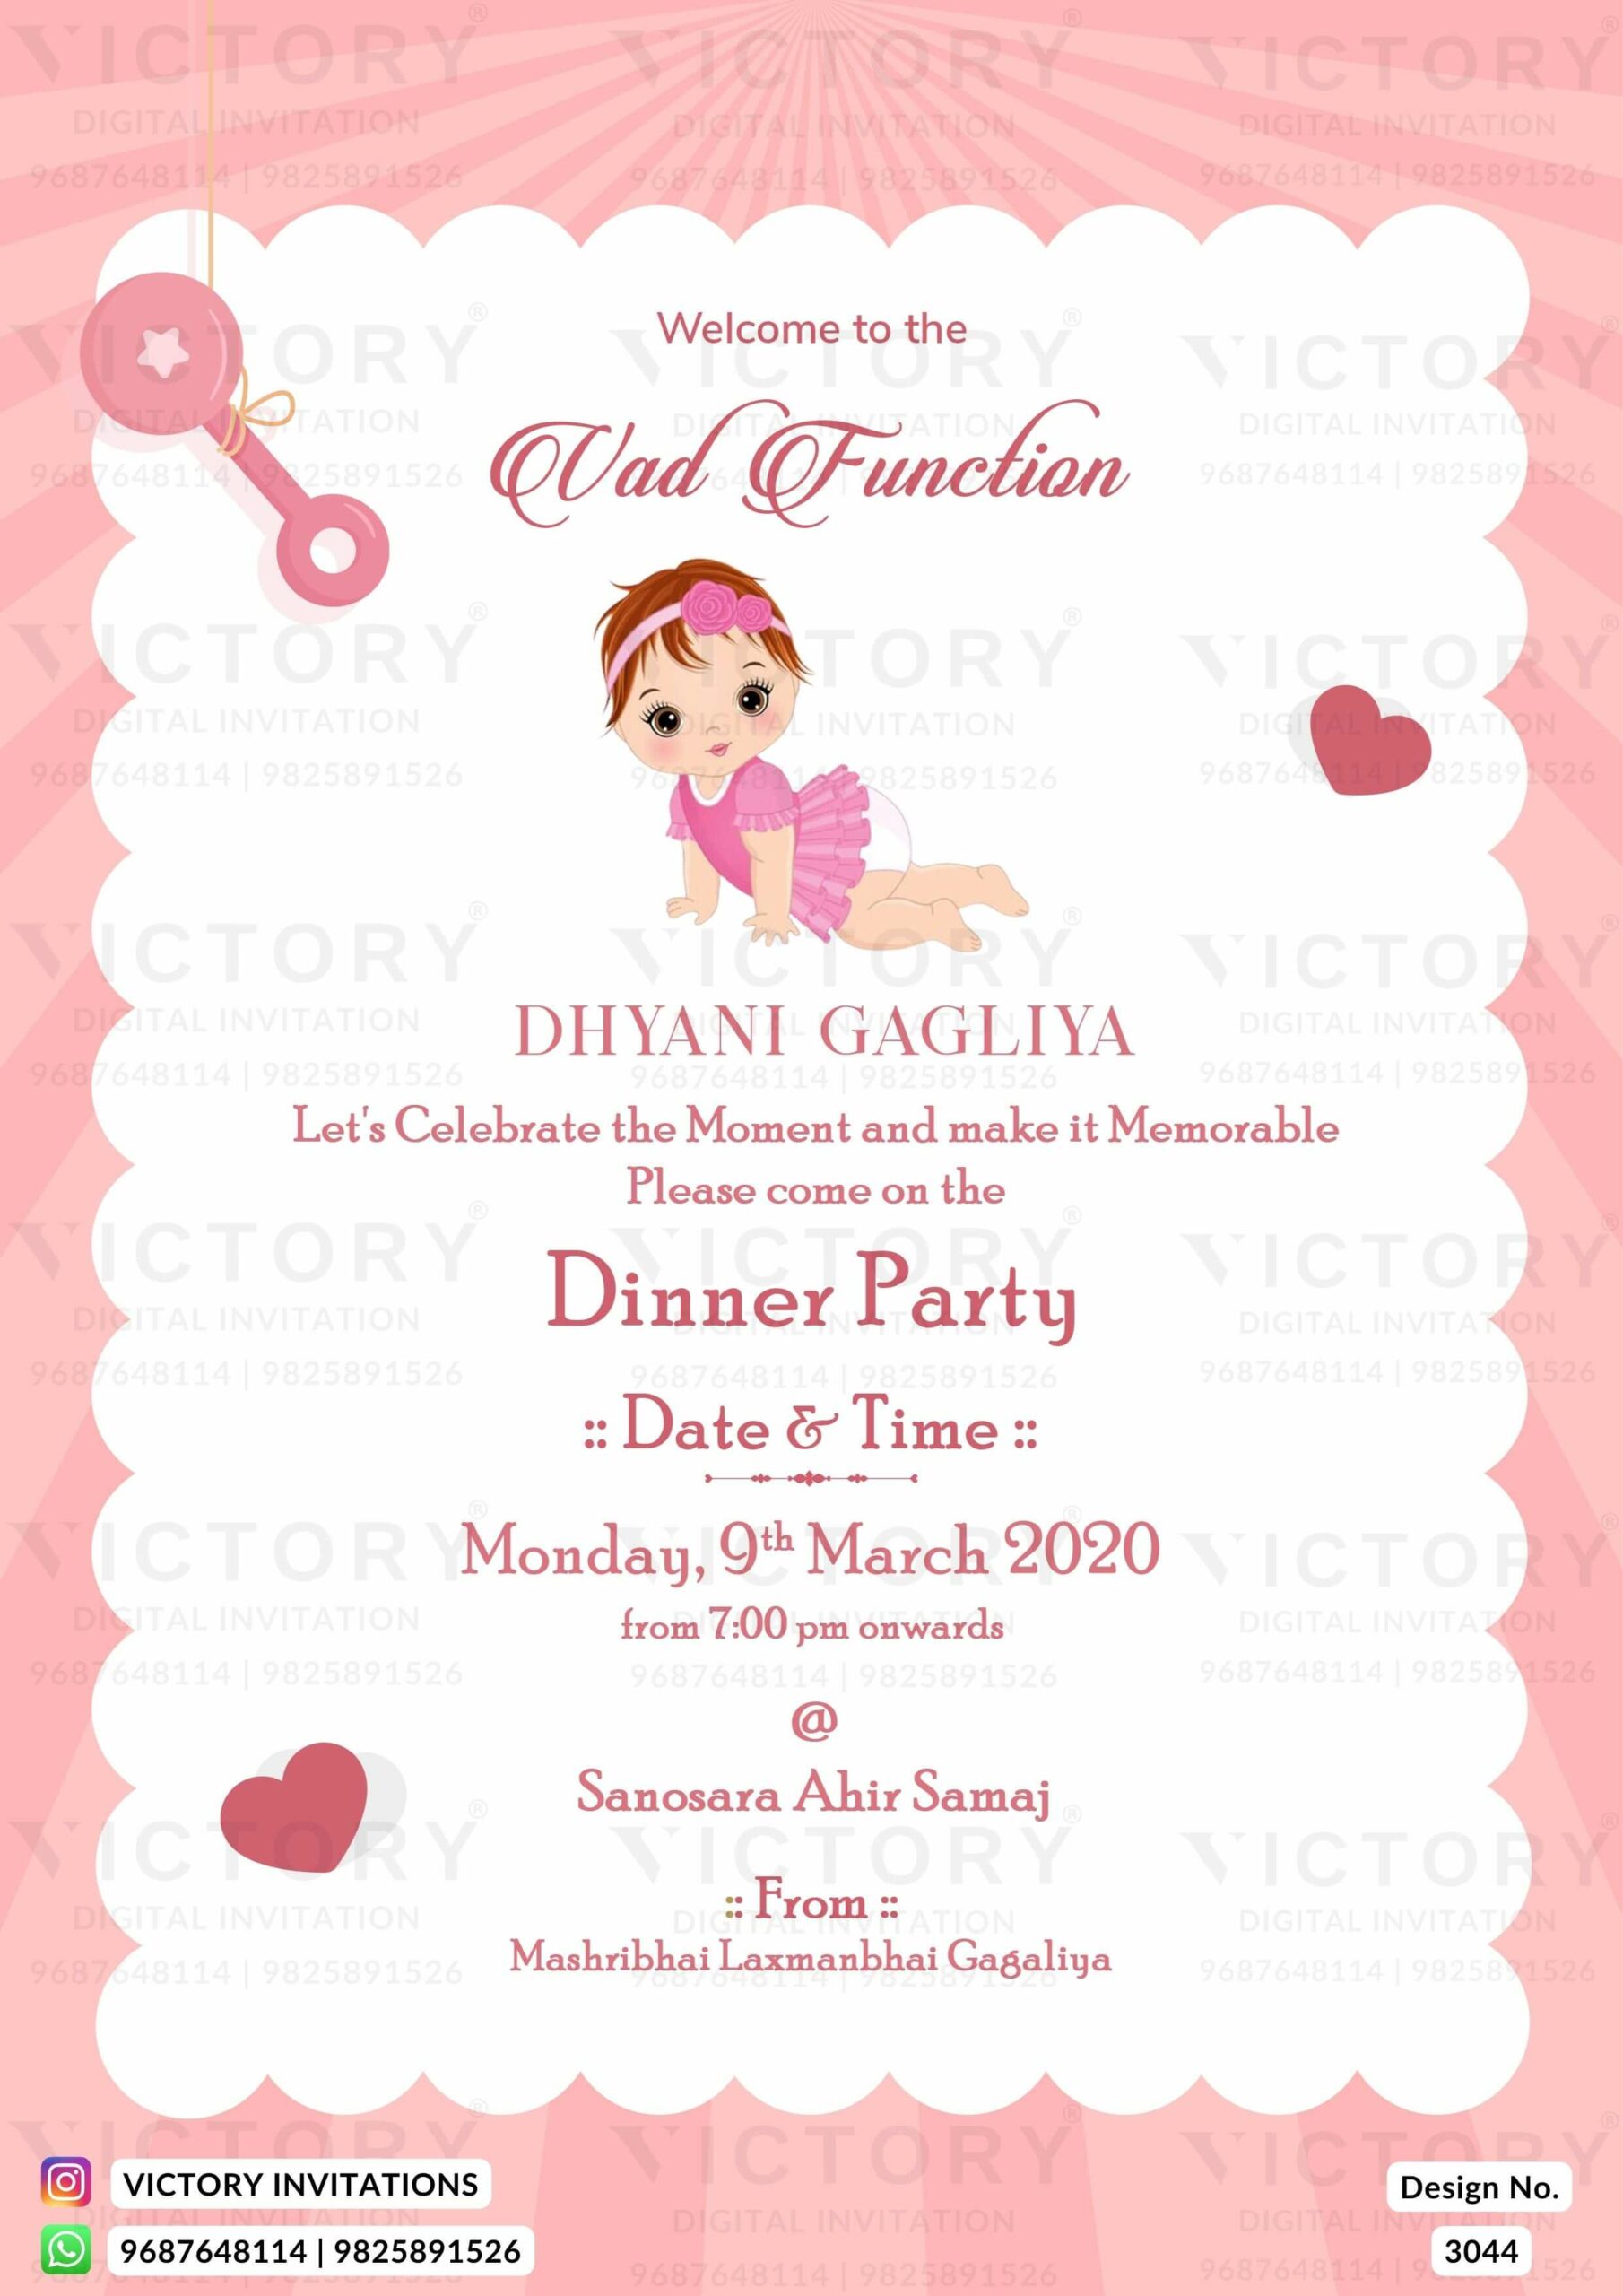 Vad Function ceremony digital invitation card design no.3044